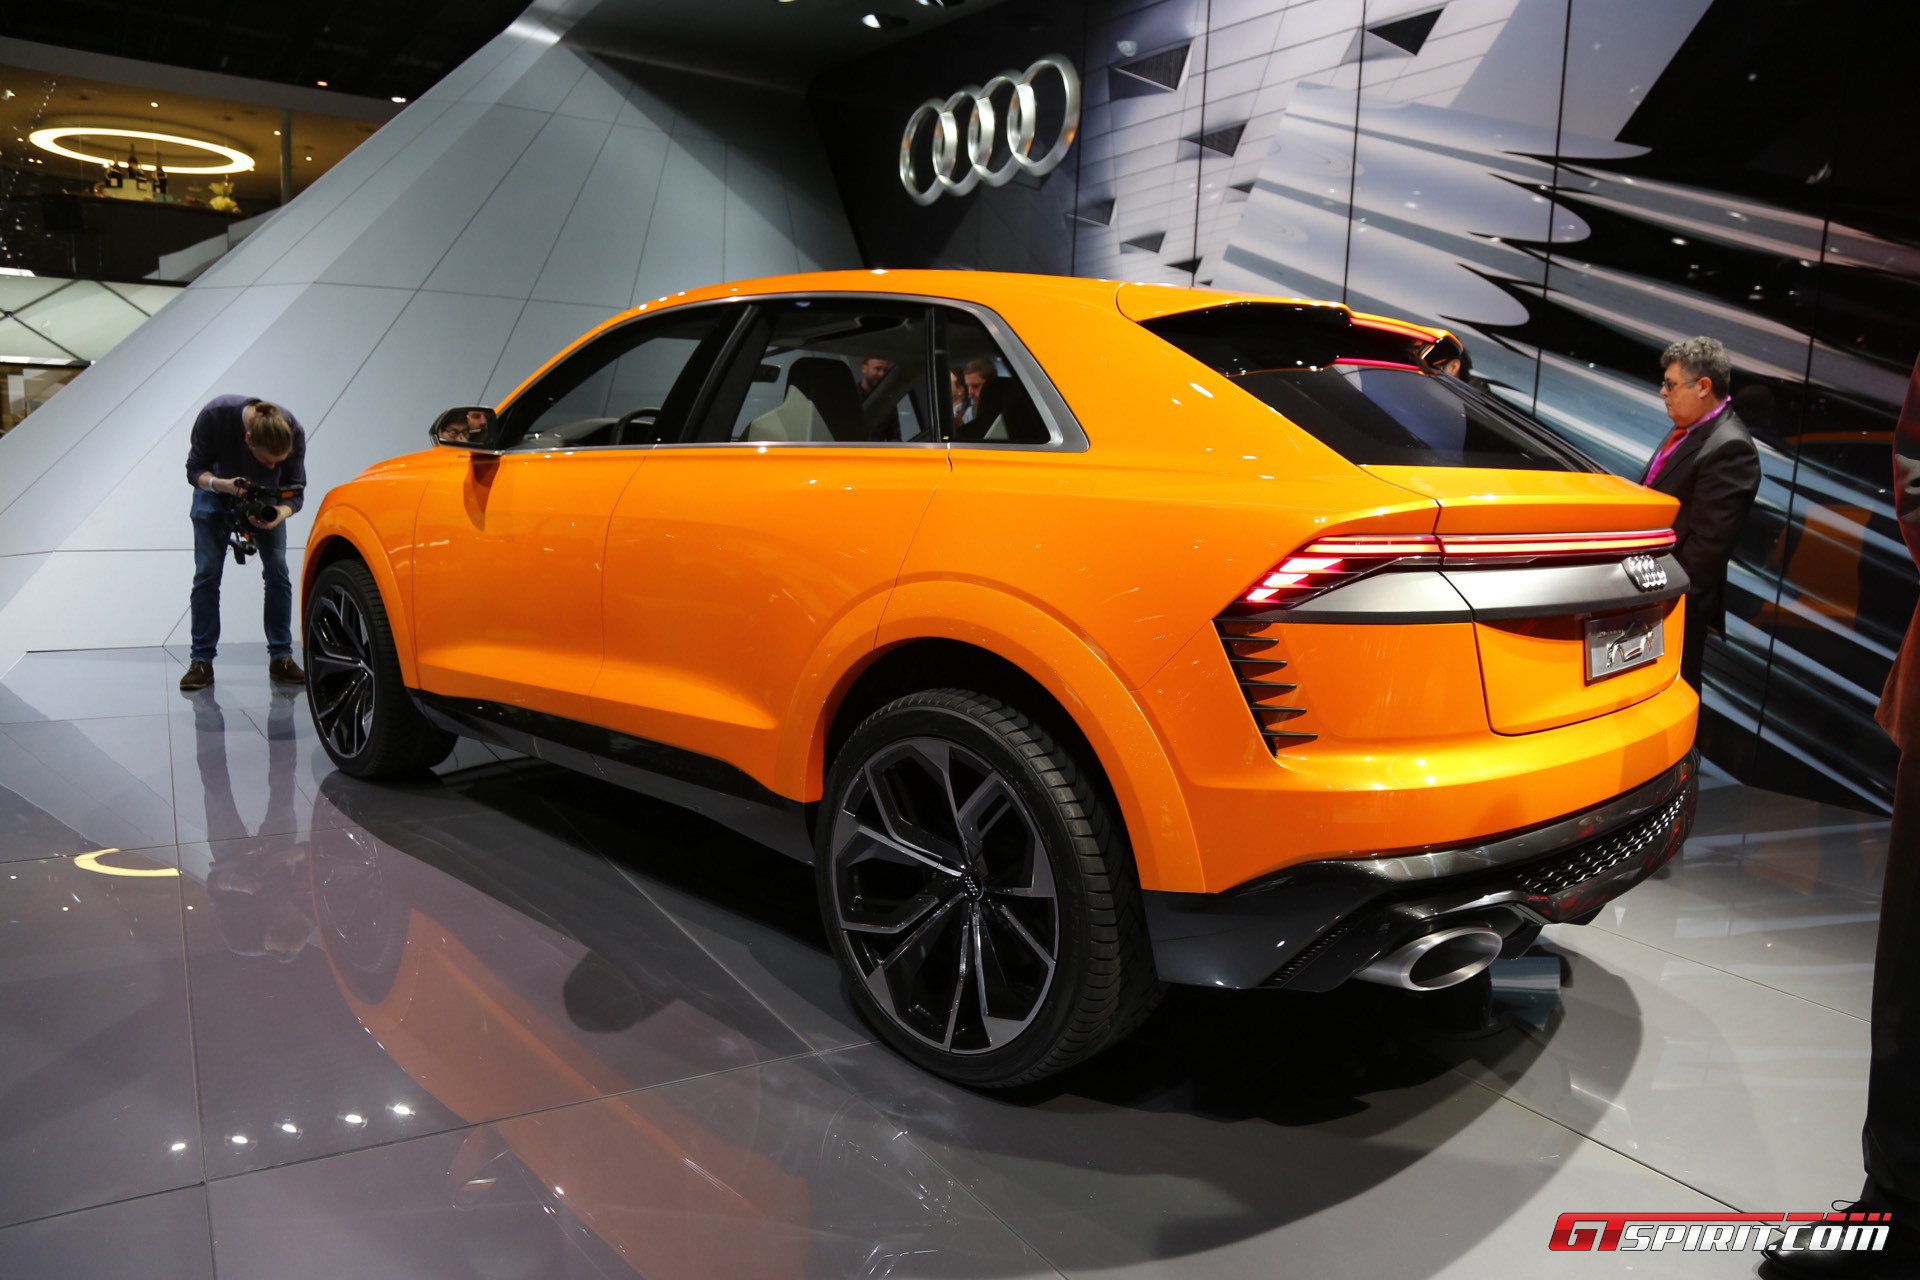 Revolutionary Innovation: The 2017 Audi Q8 Concept